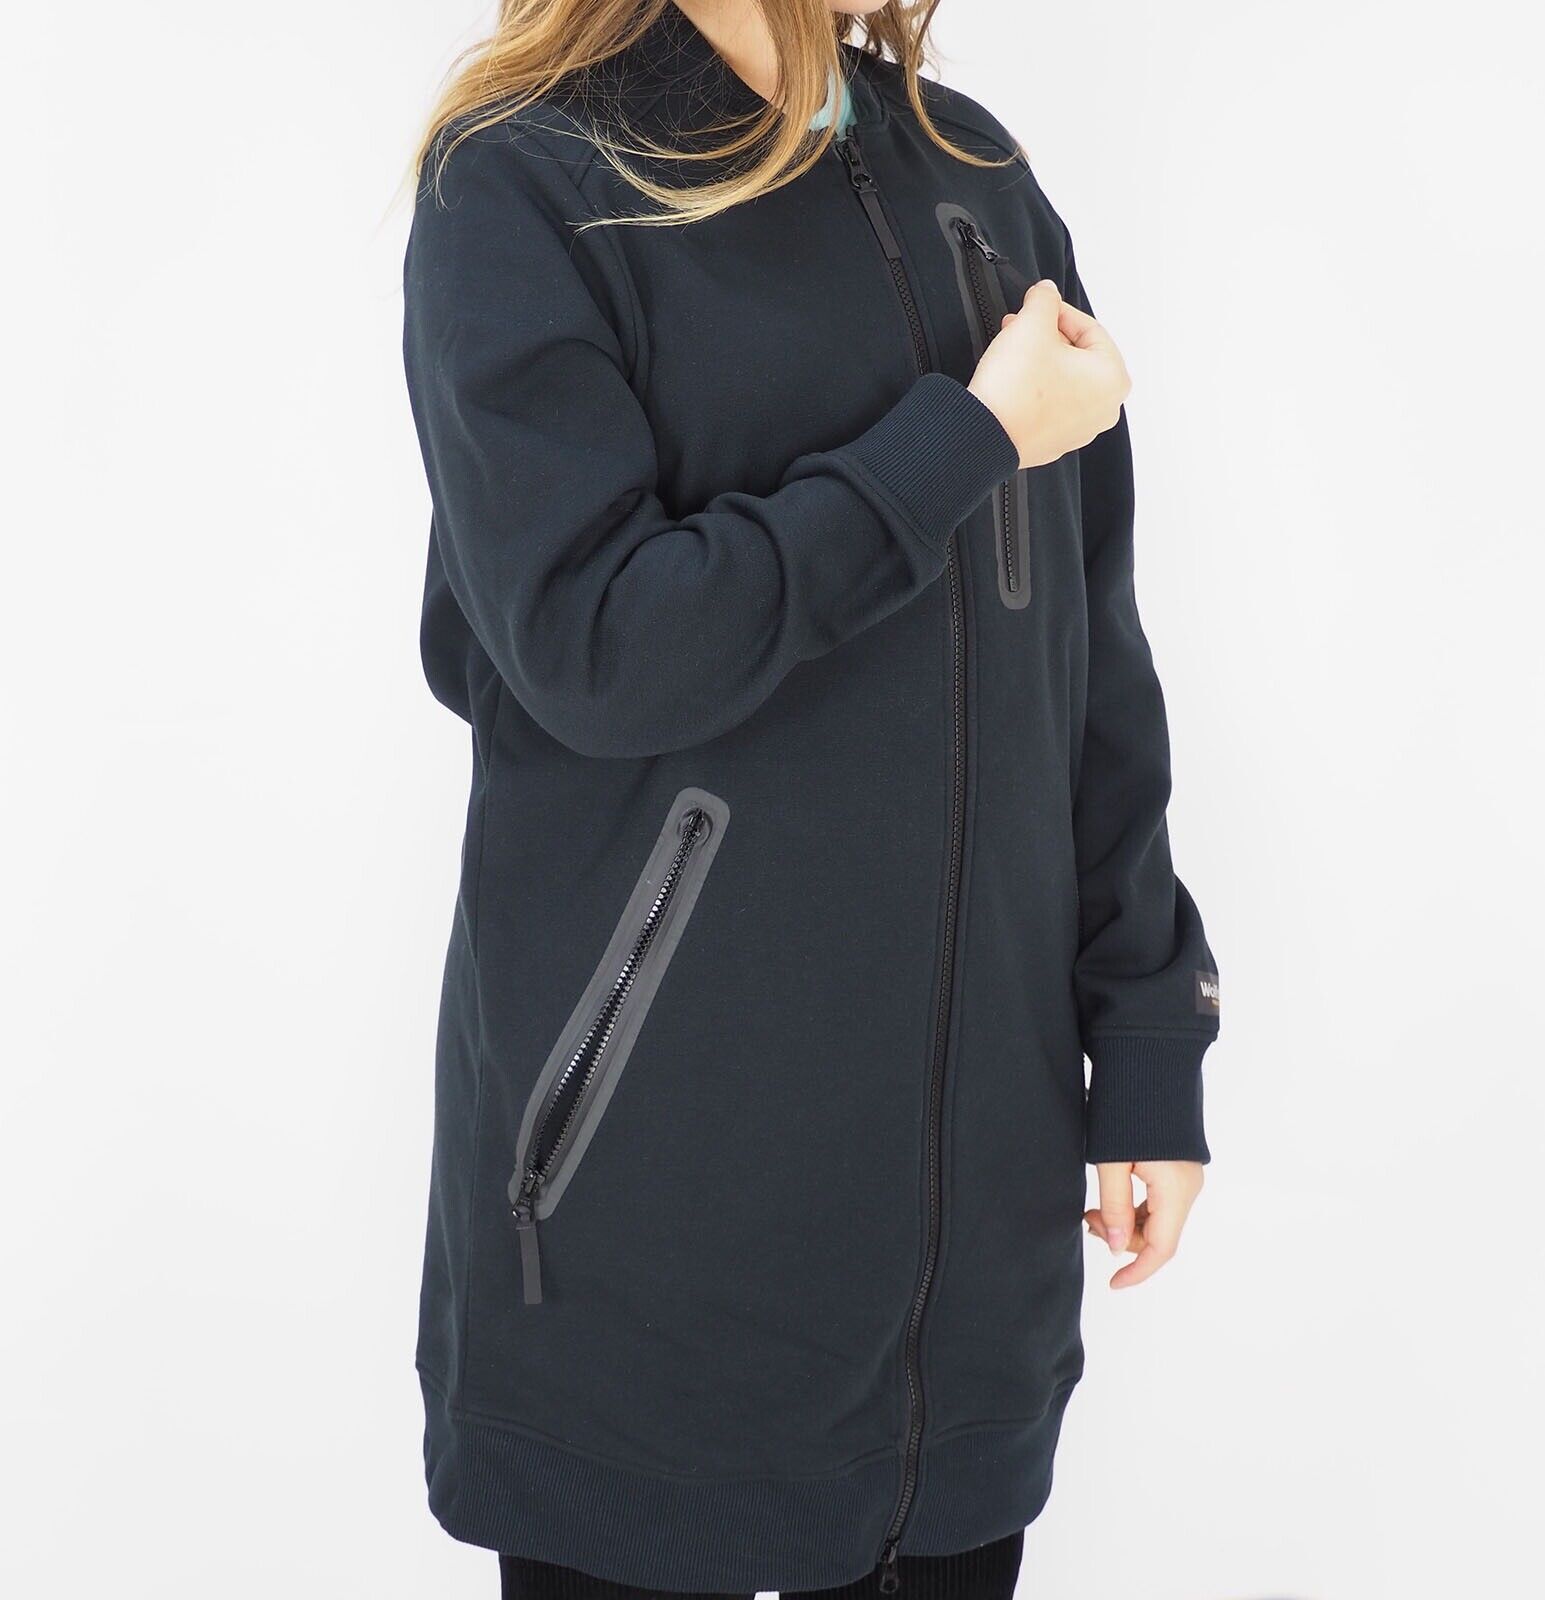 Womens Jack Wolfskin Tribeca 1705041 Black Long Full Zip Up Warm Sweatshirt